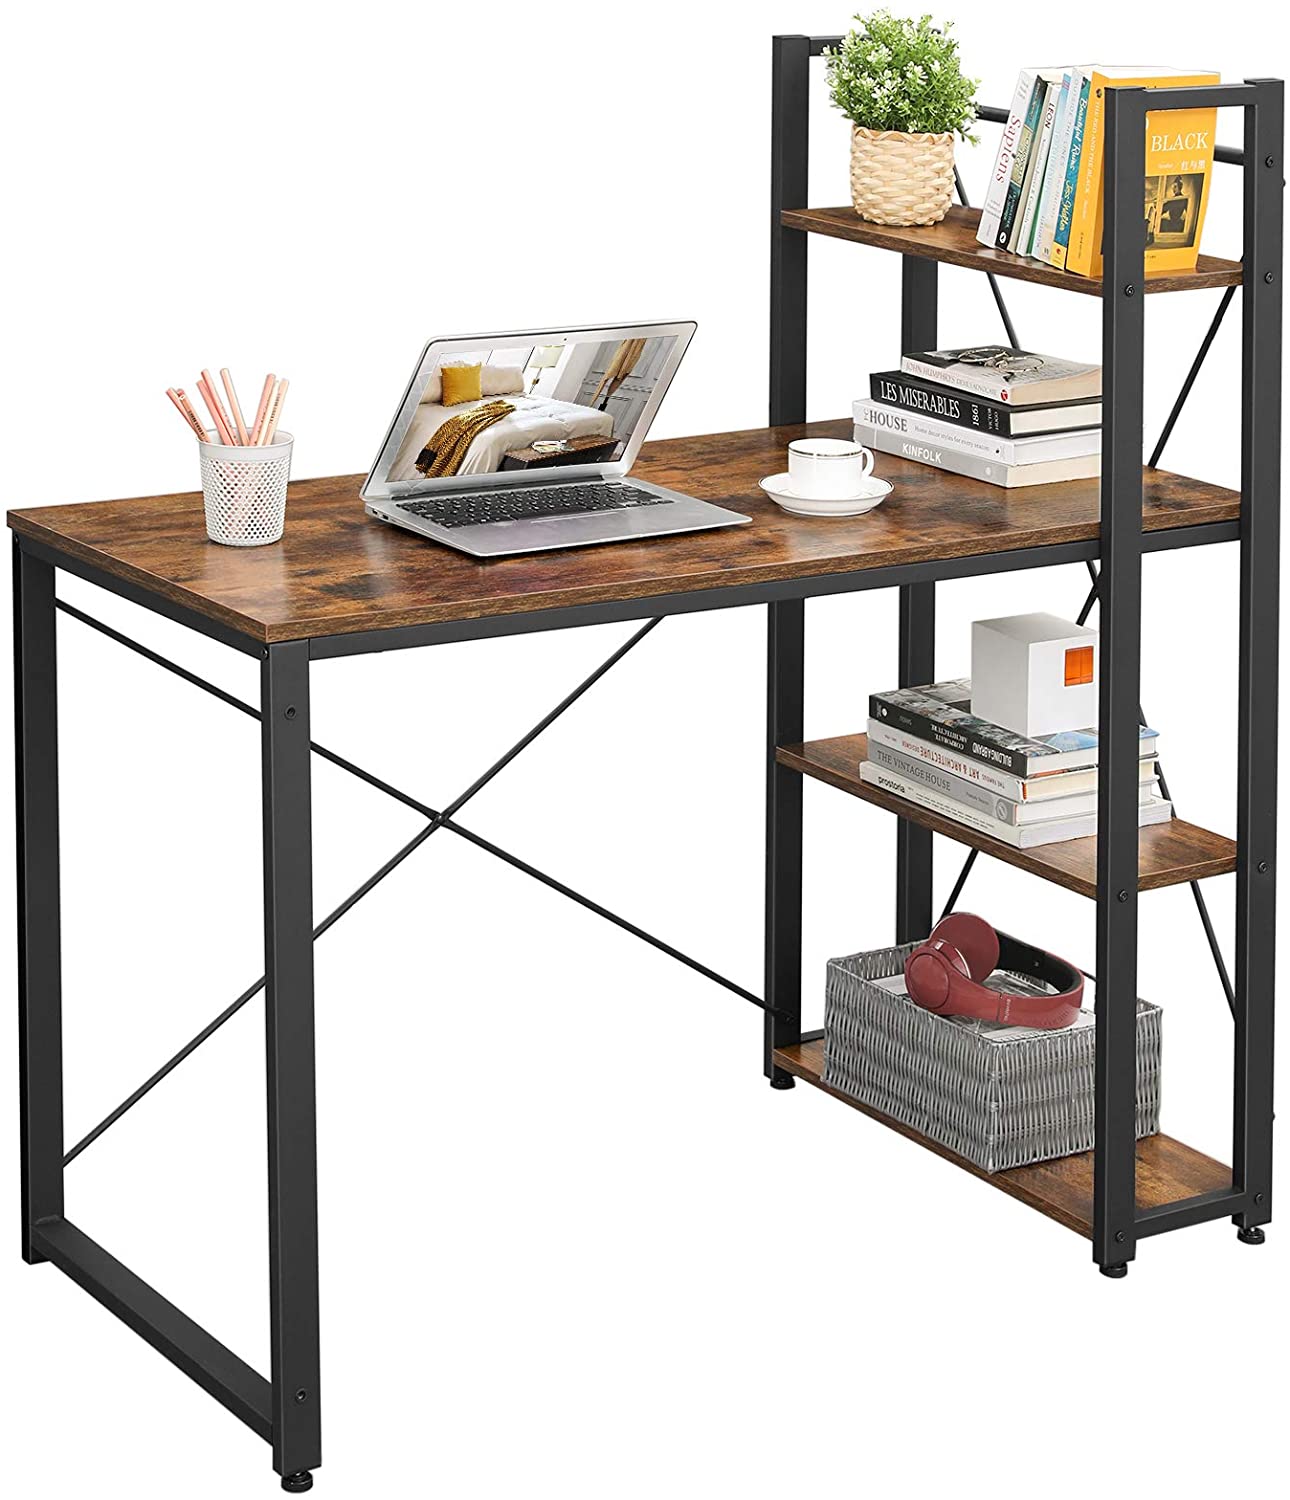 Rena Rustic Desk with Shelves